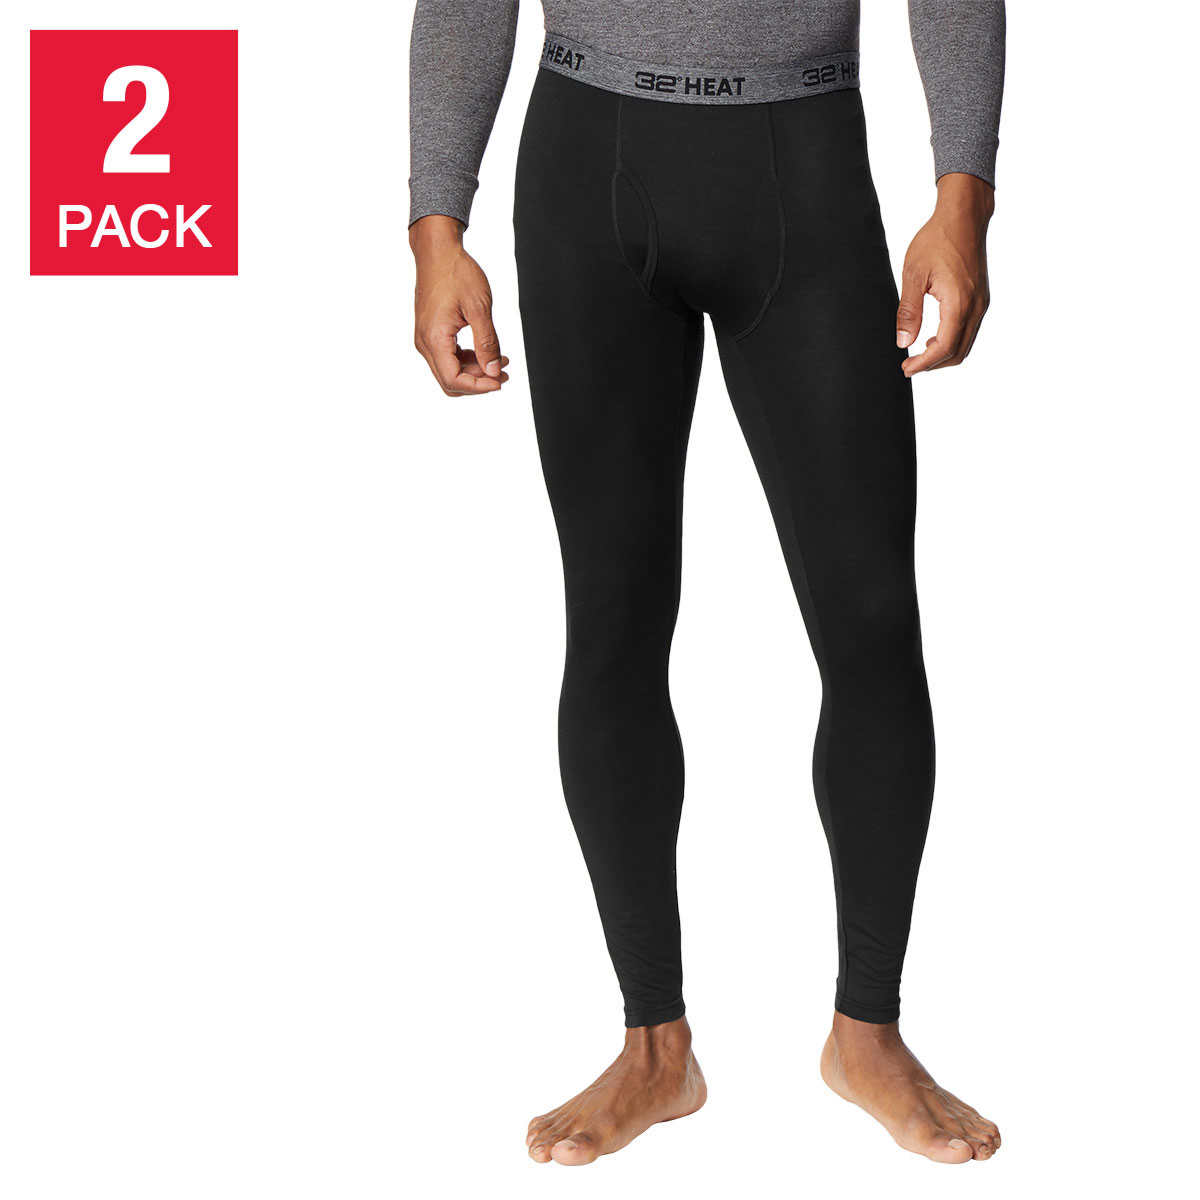 32 Degrees Men's Heat Pant, 2-pack